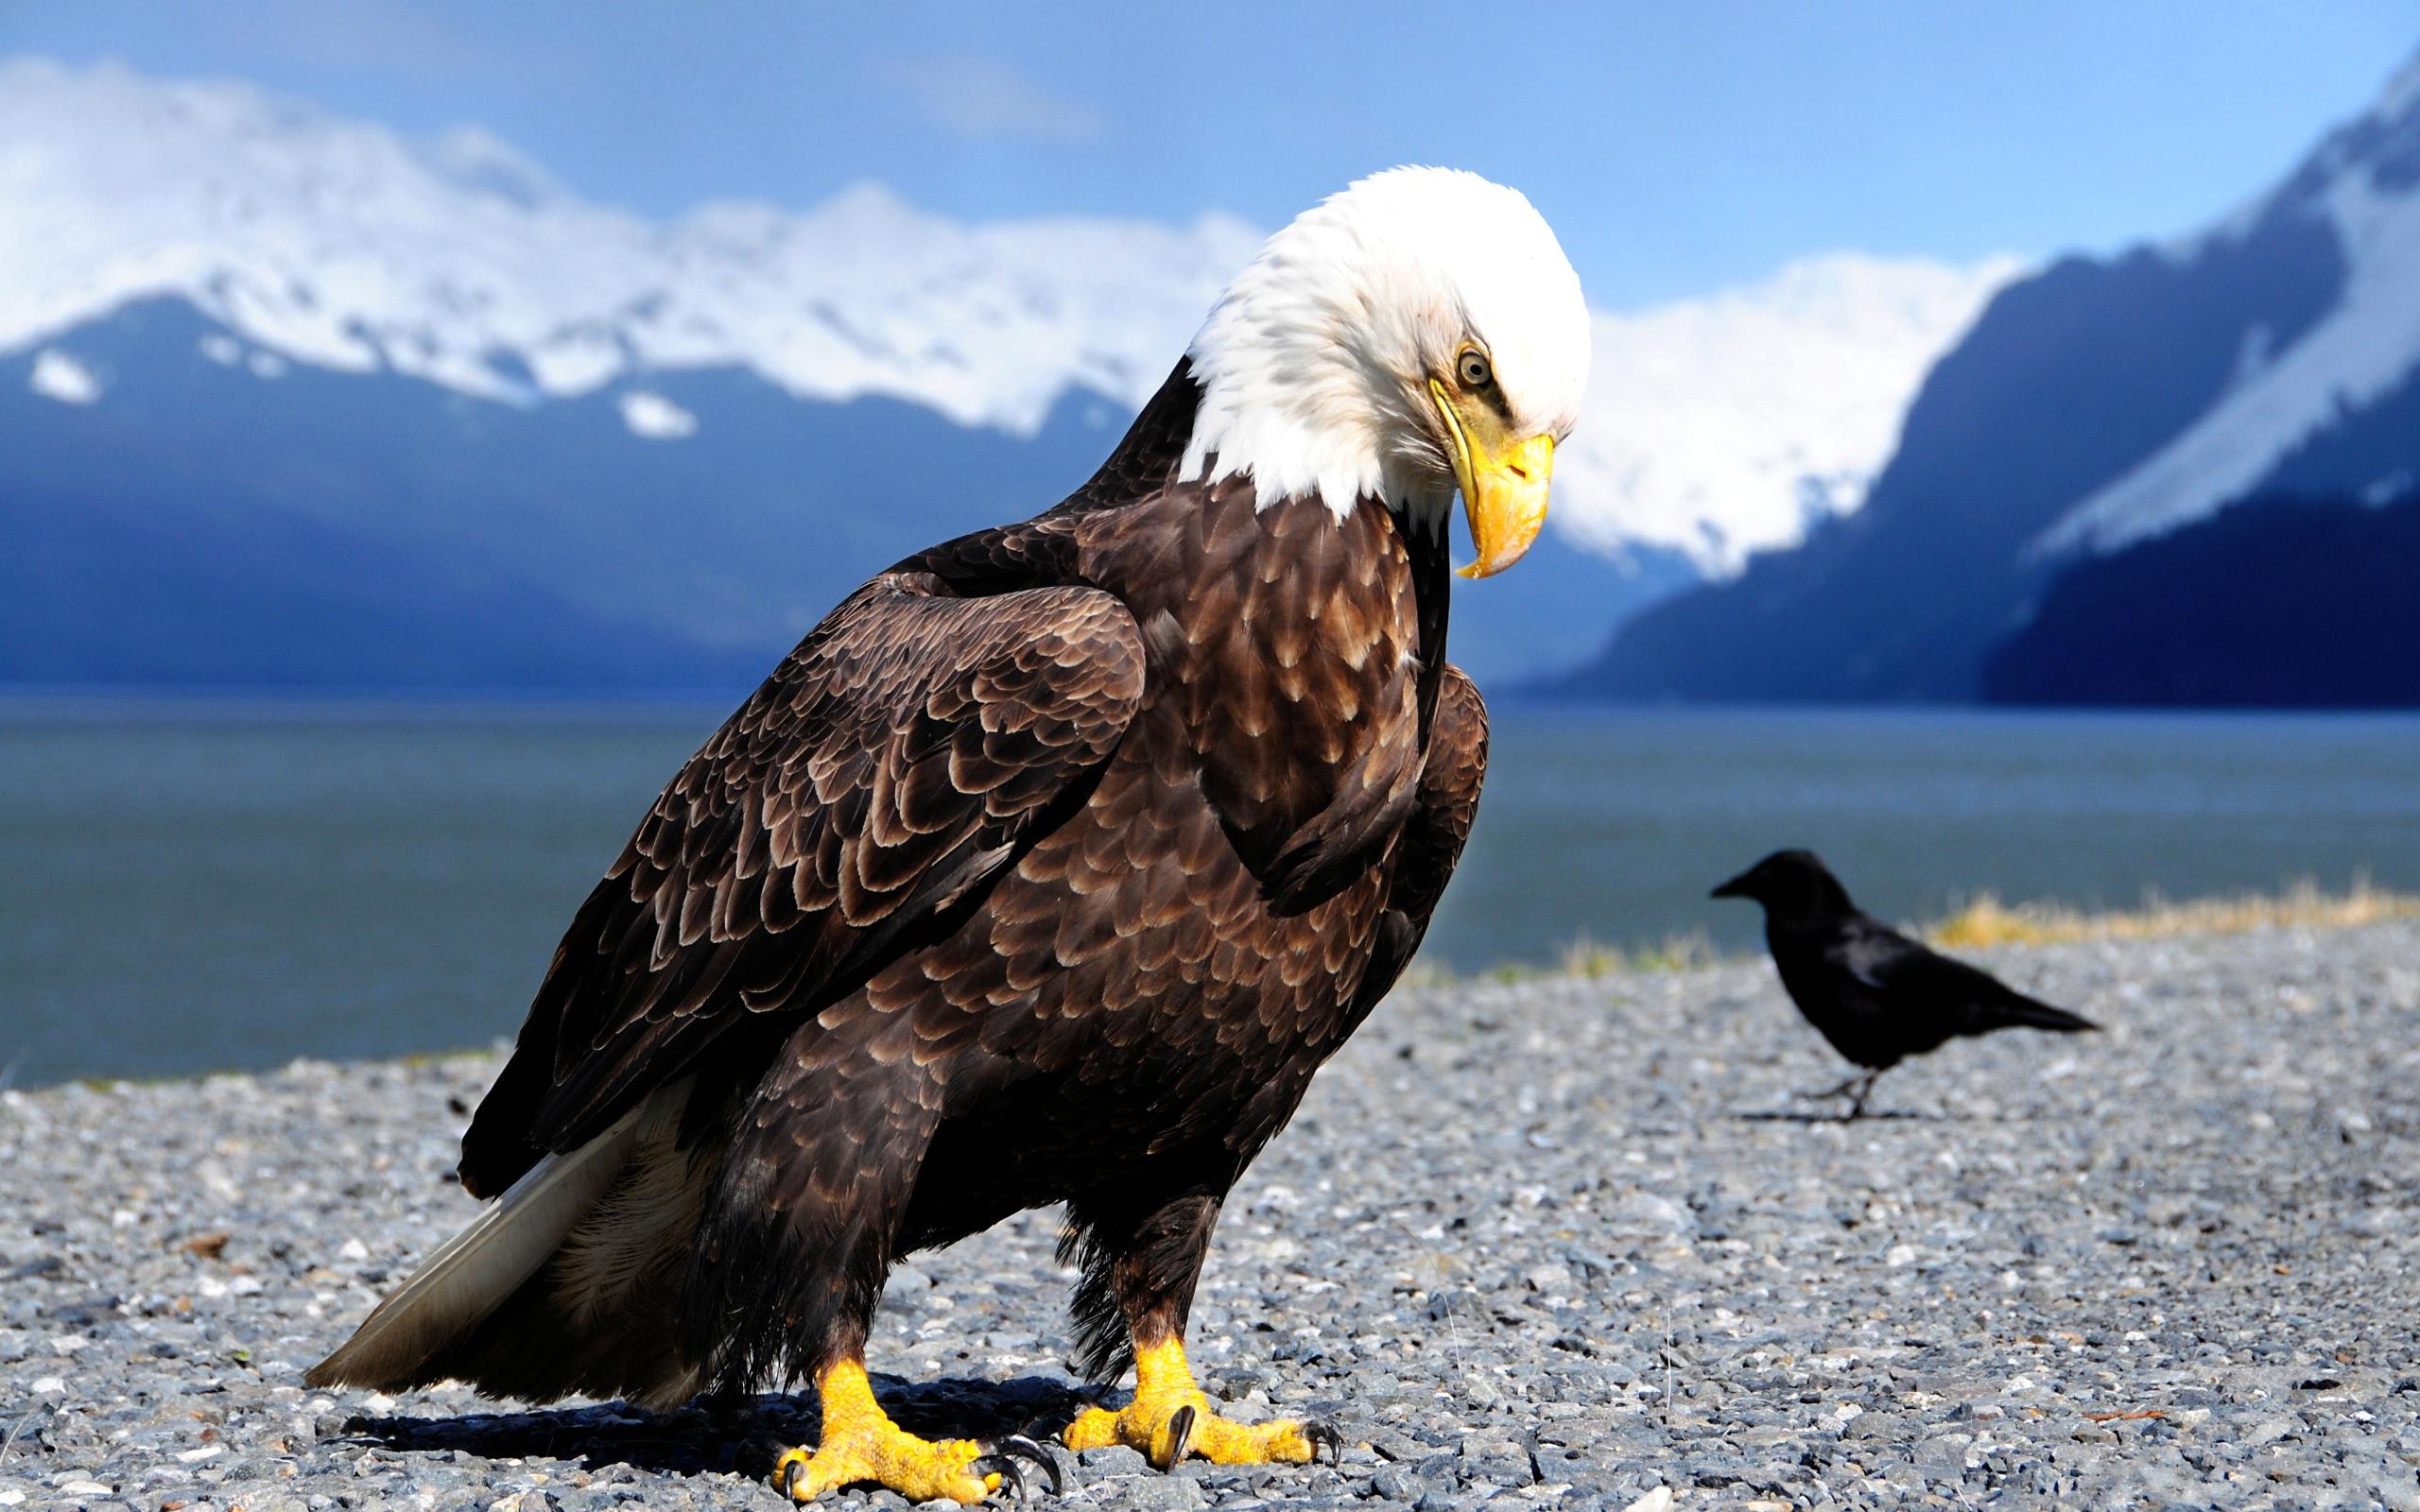 162012 descargar imagen águila, aves, animales, águila calva, ave: fondos de pantalla y protectores de pantalla gratis